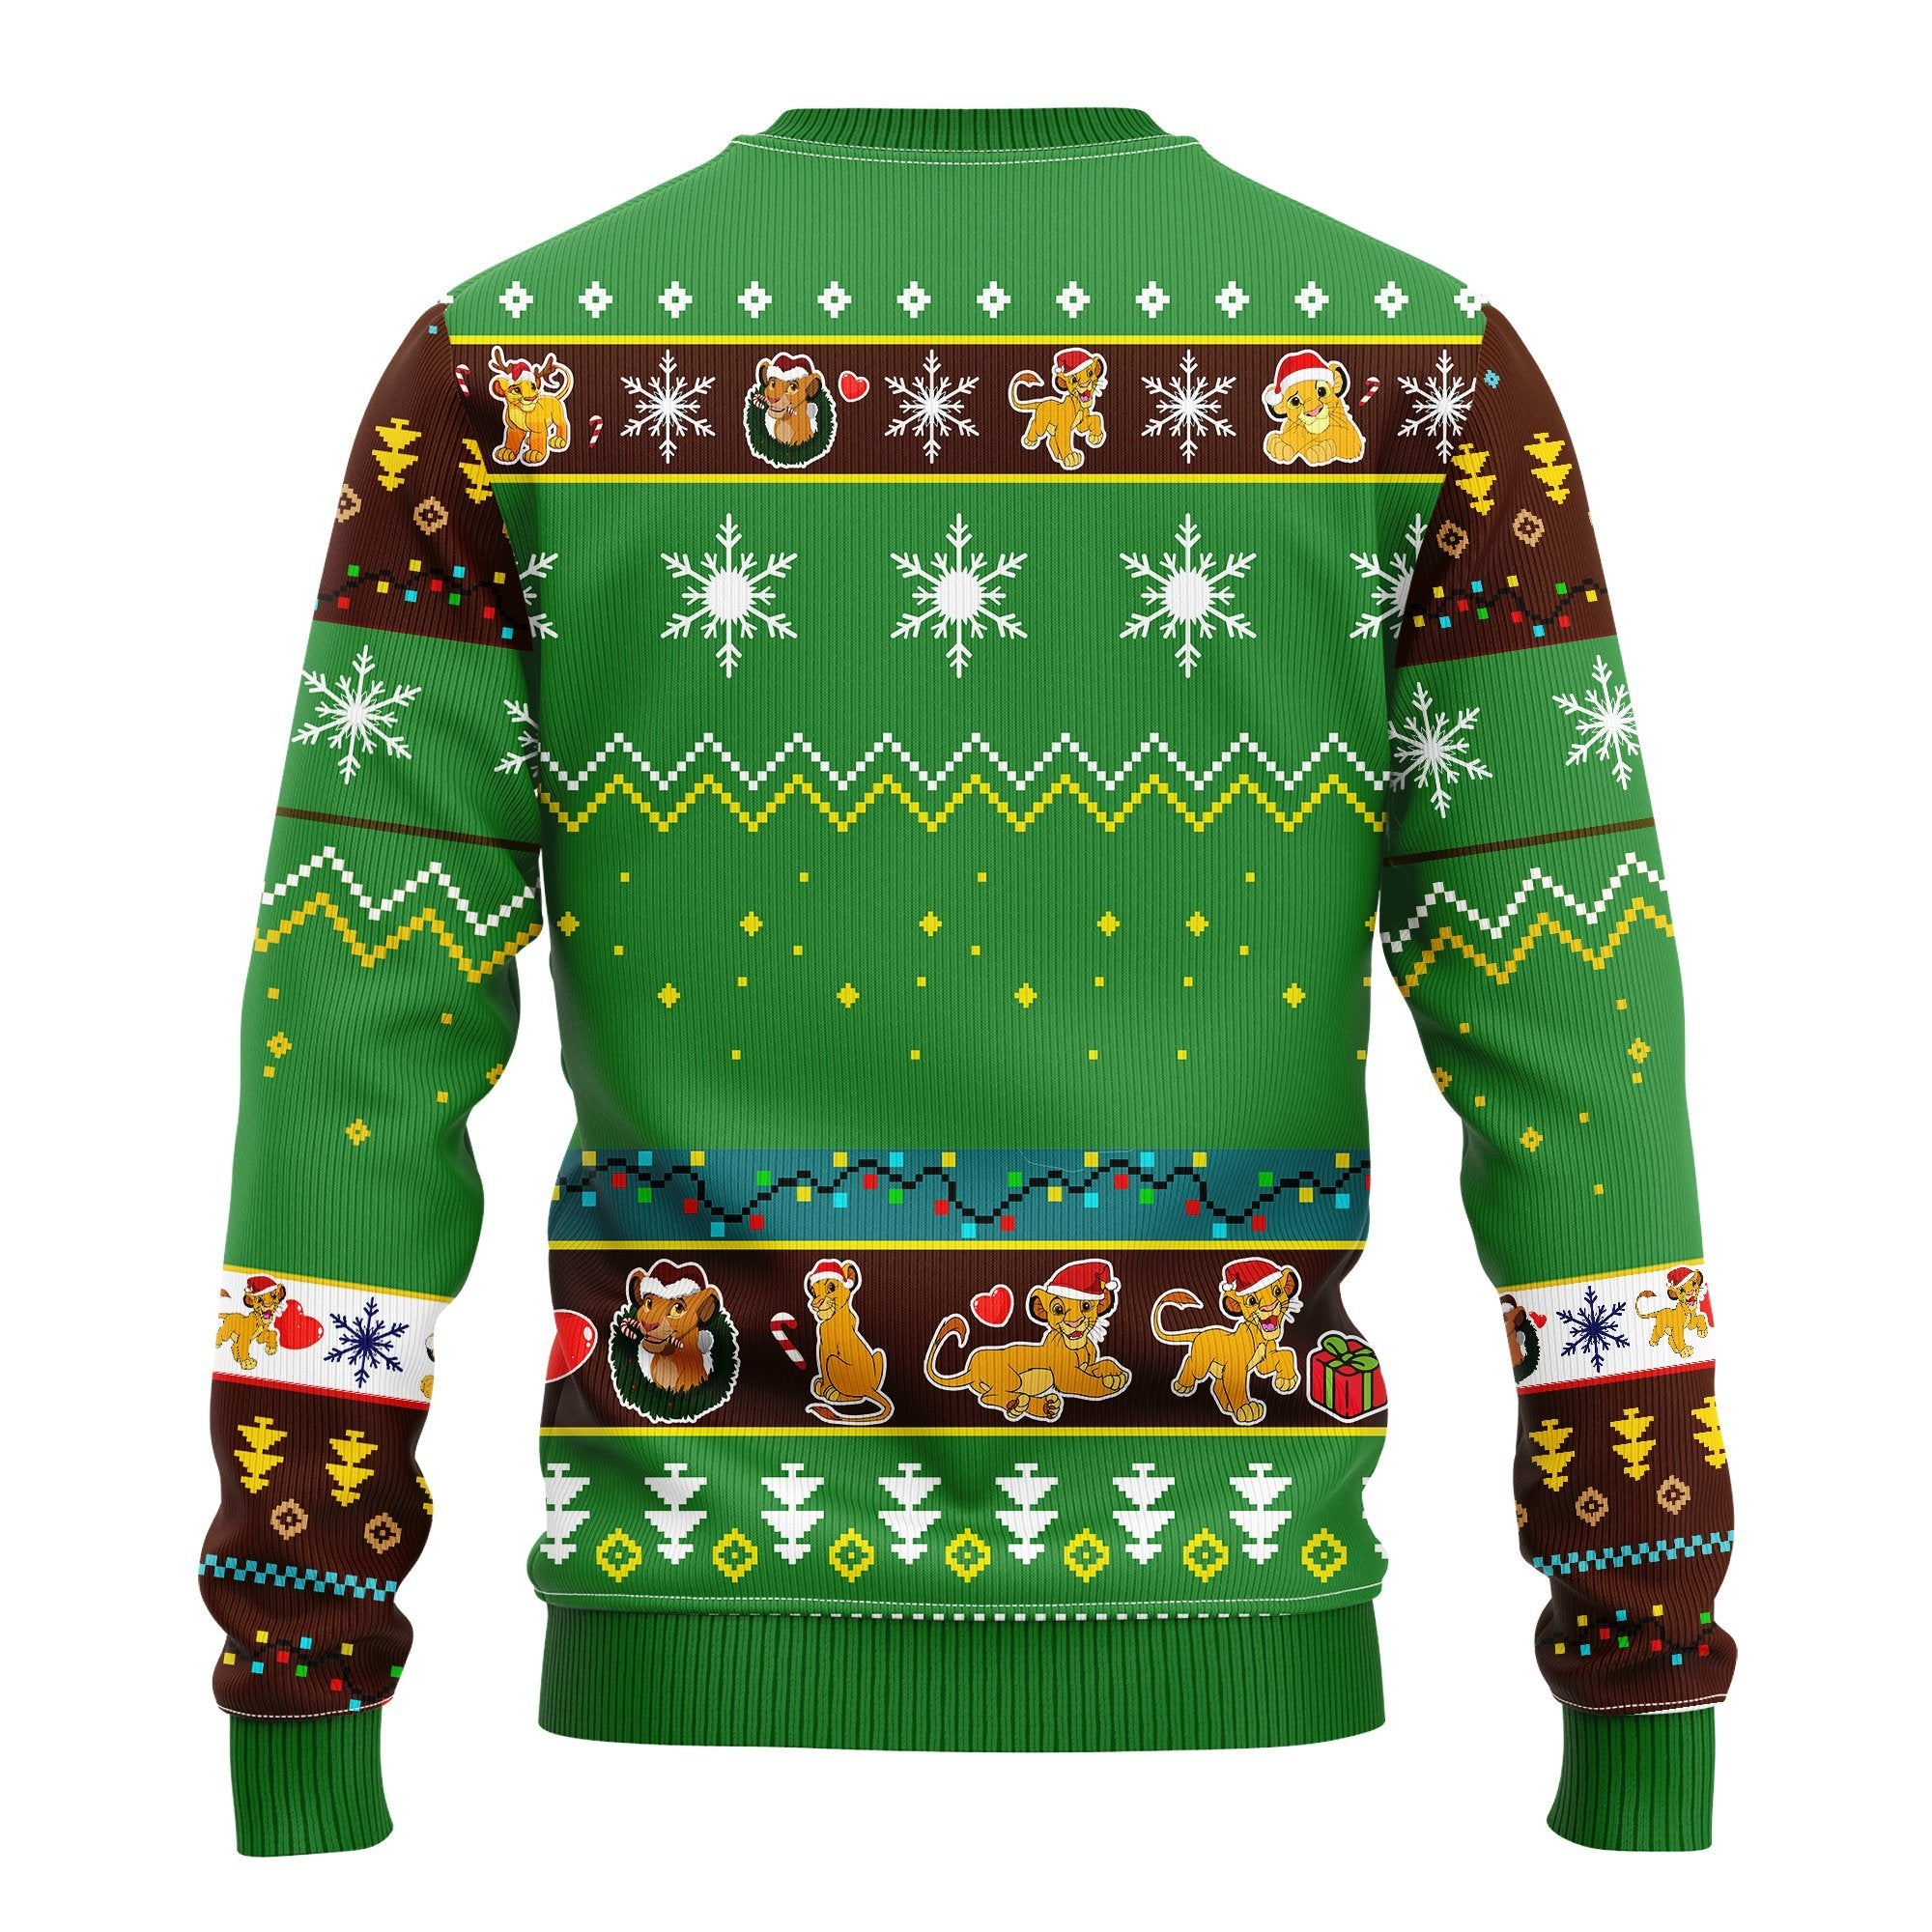 Lion King Simba Ugly Christmas Sweater Green 1 Amazing Gift Idea Thanksgiving Gift